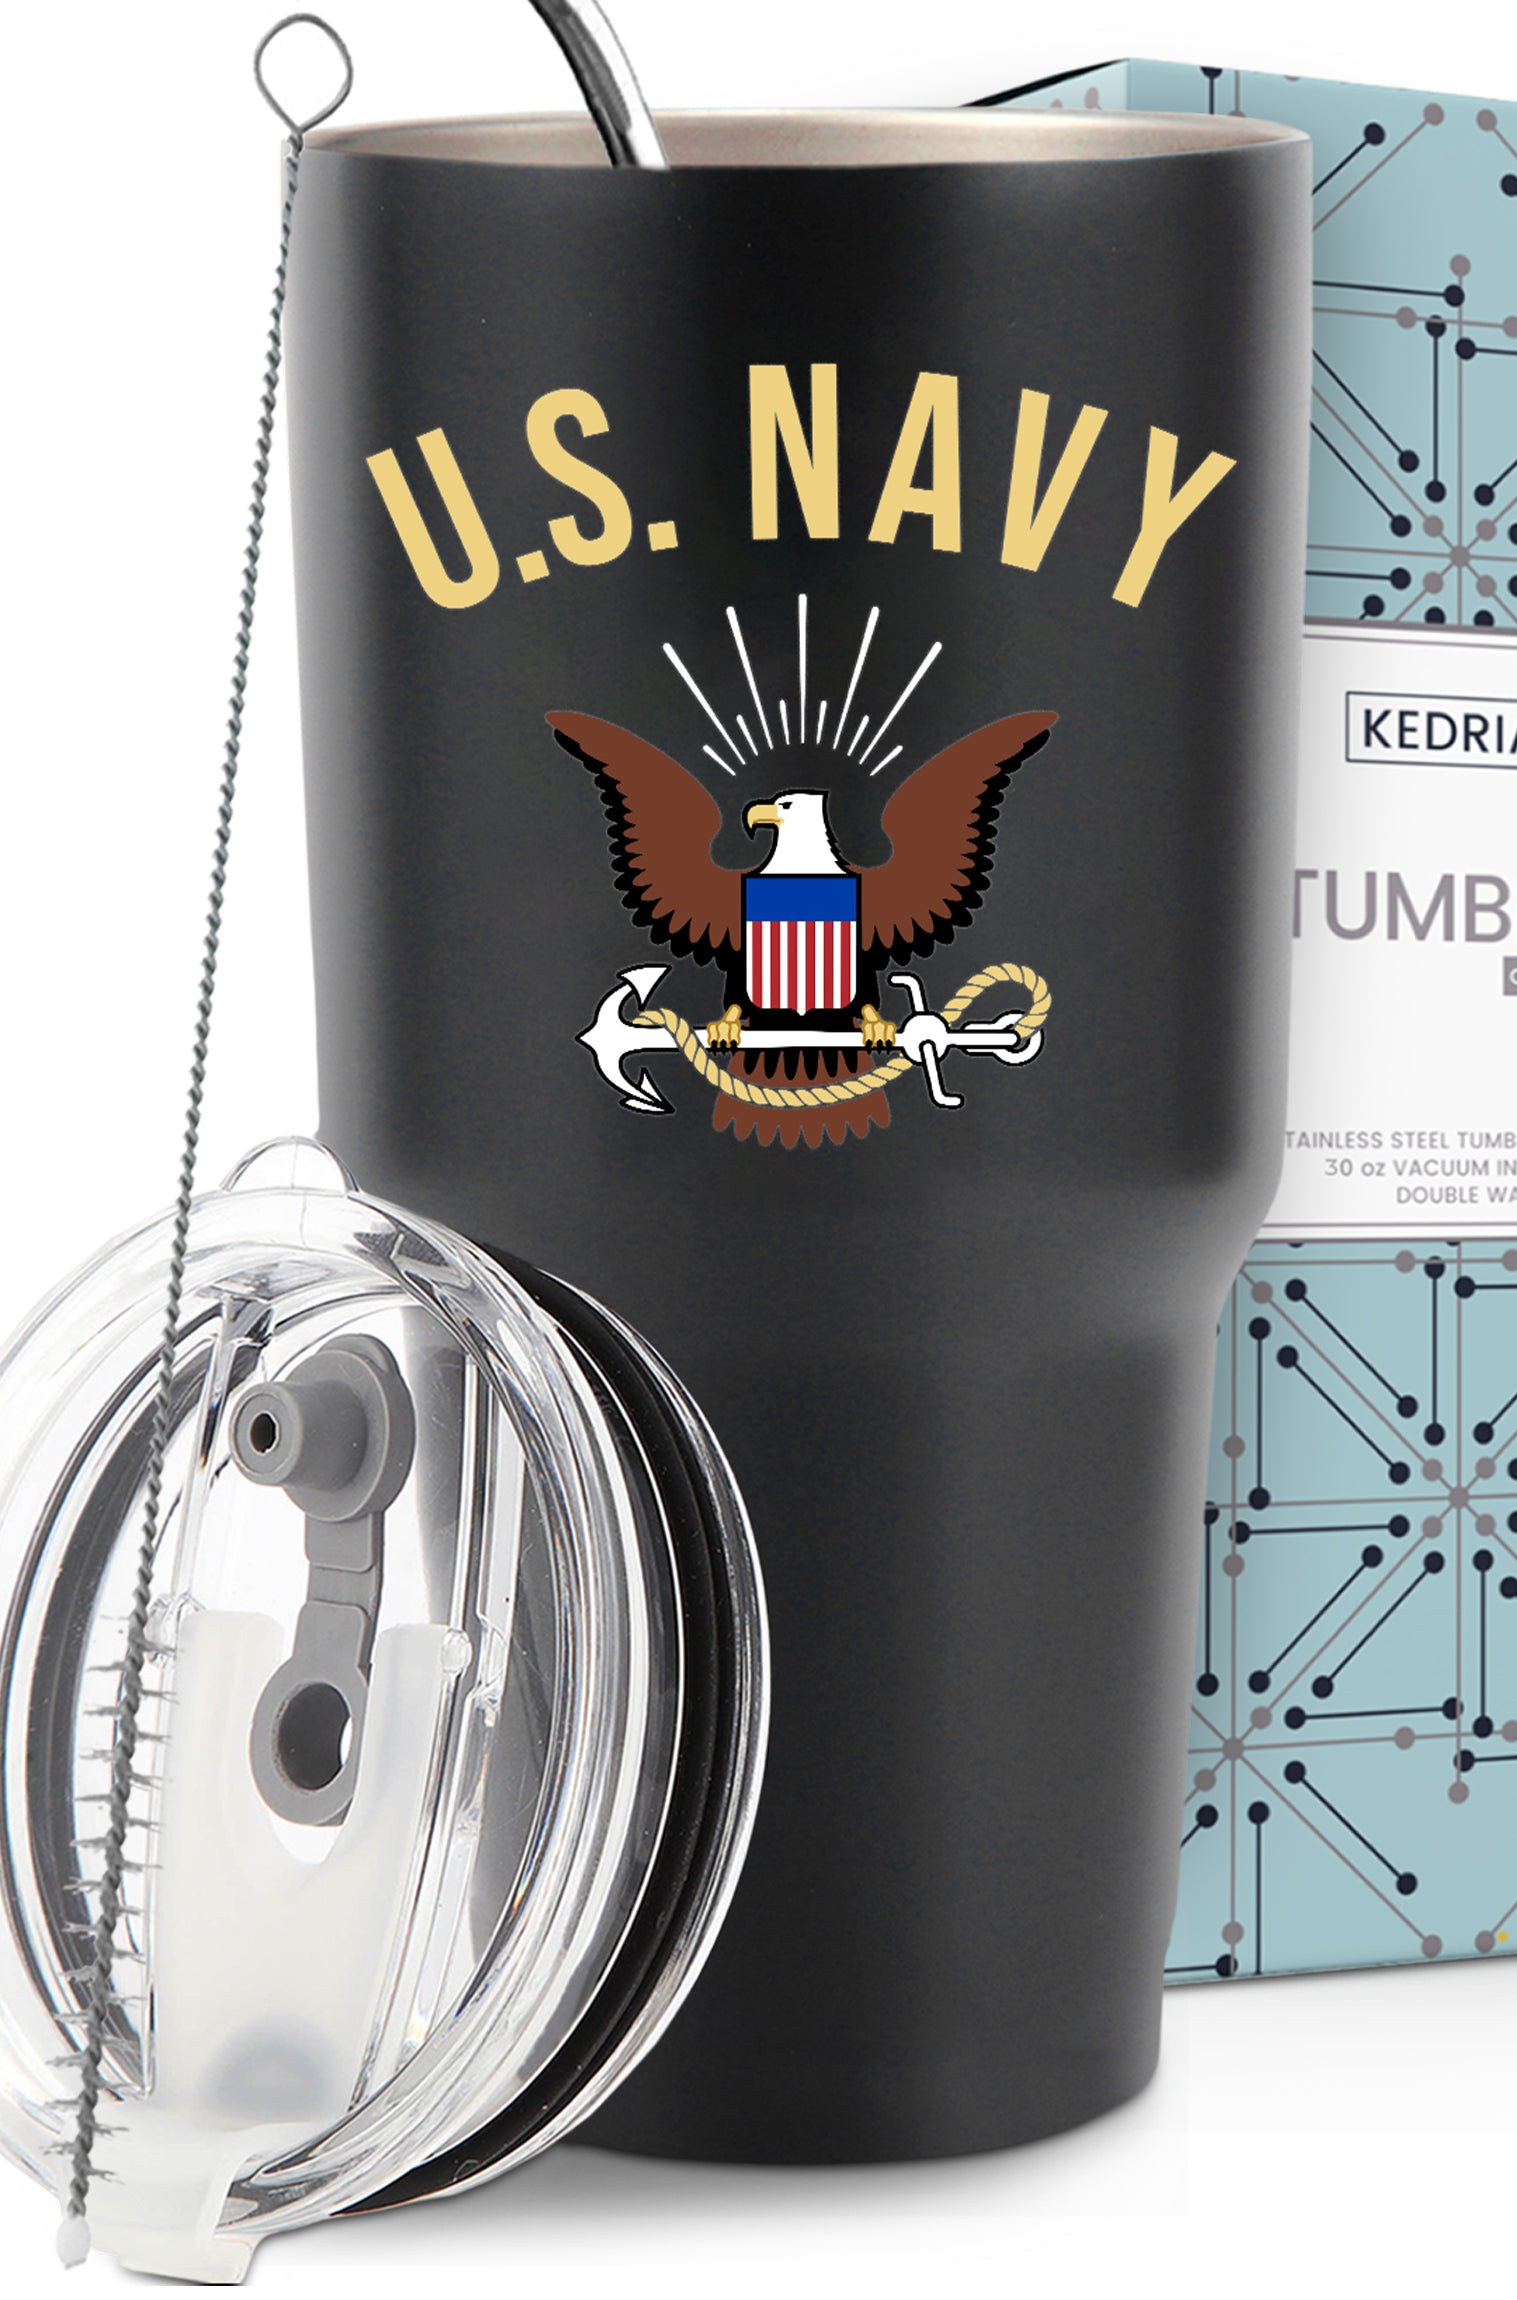 U.S. Navy Tumbler 30oz